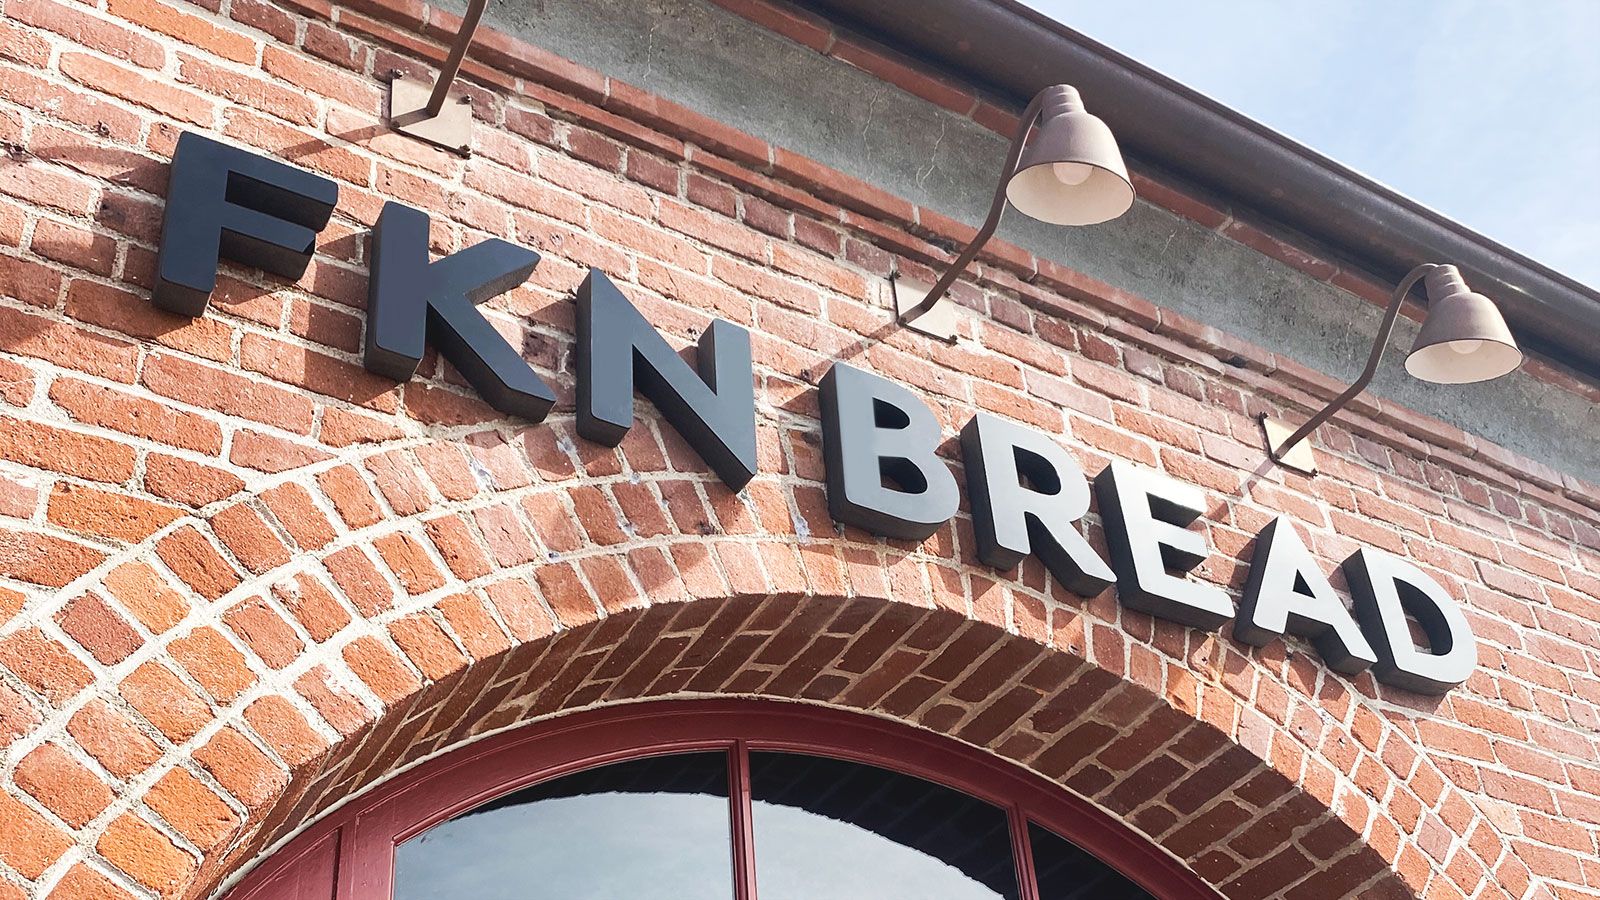 FKN Bread 3d letters